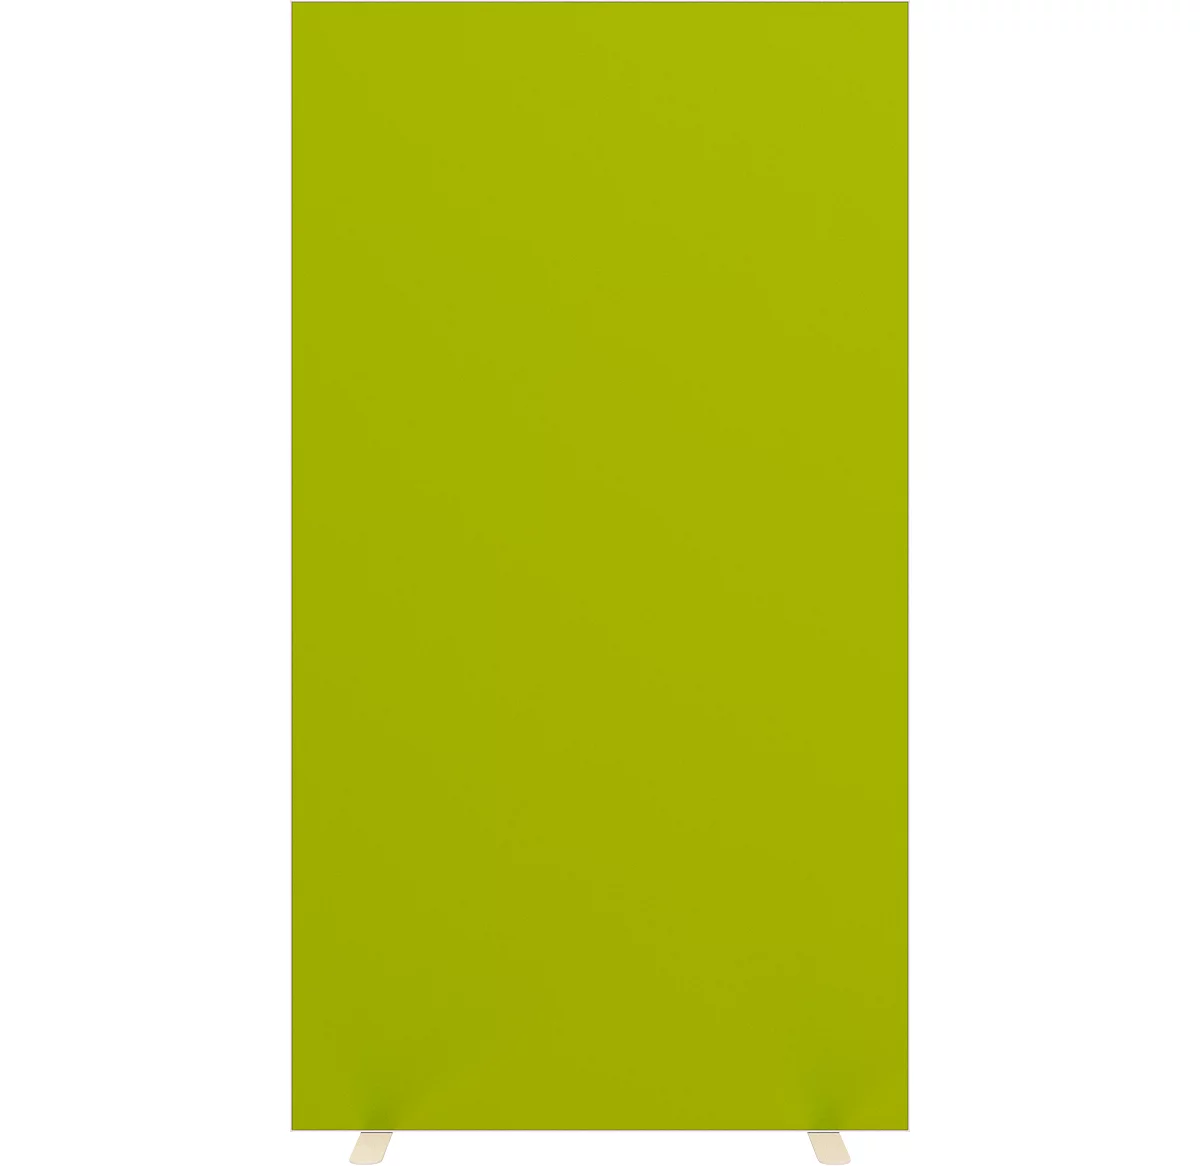 Design-Trennwand Paperflow, Stoffbespannung grün, schwer entflammbar gemäß DIN 4102 (B1), desinfektionsmittelbeständig, B 940 x T 390 x H 1740 mm